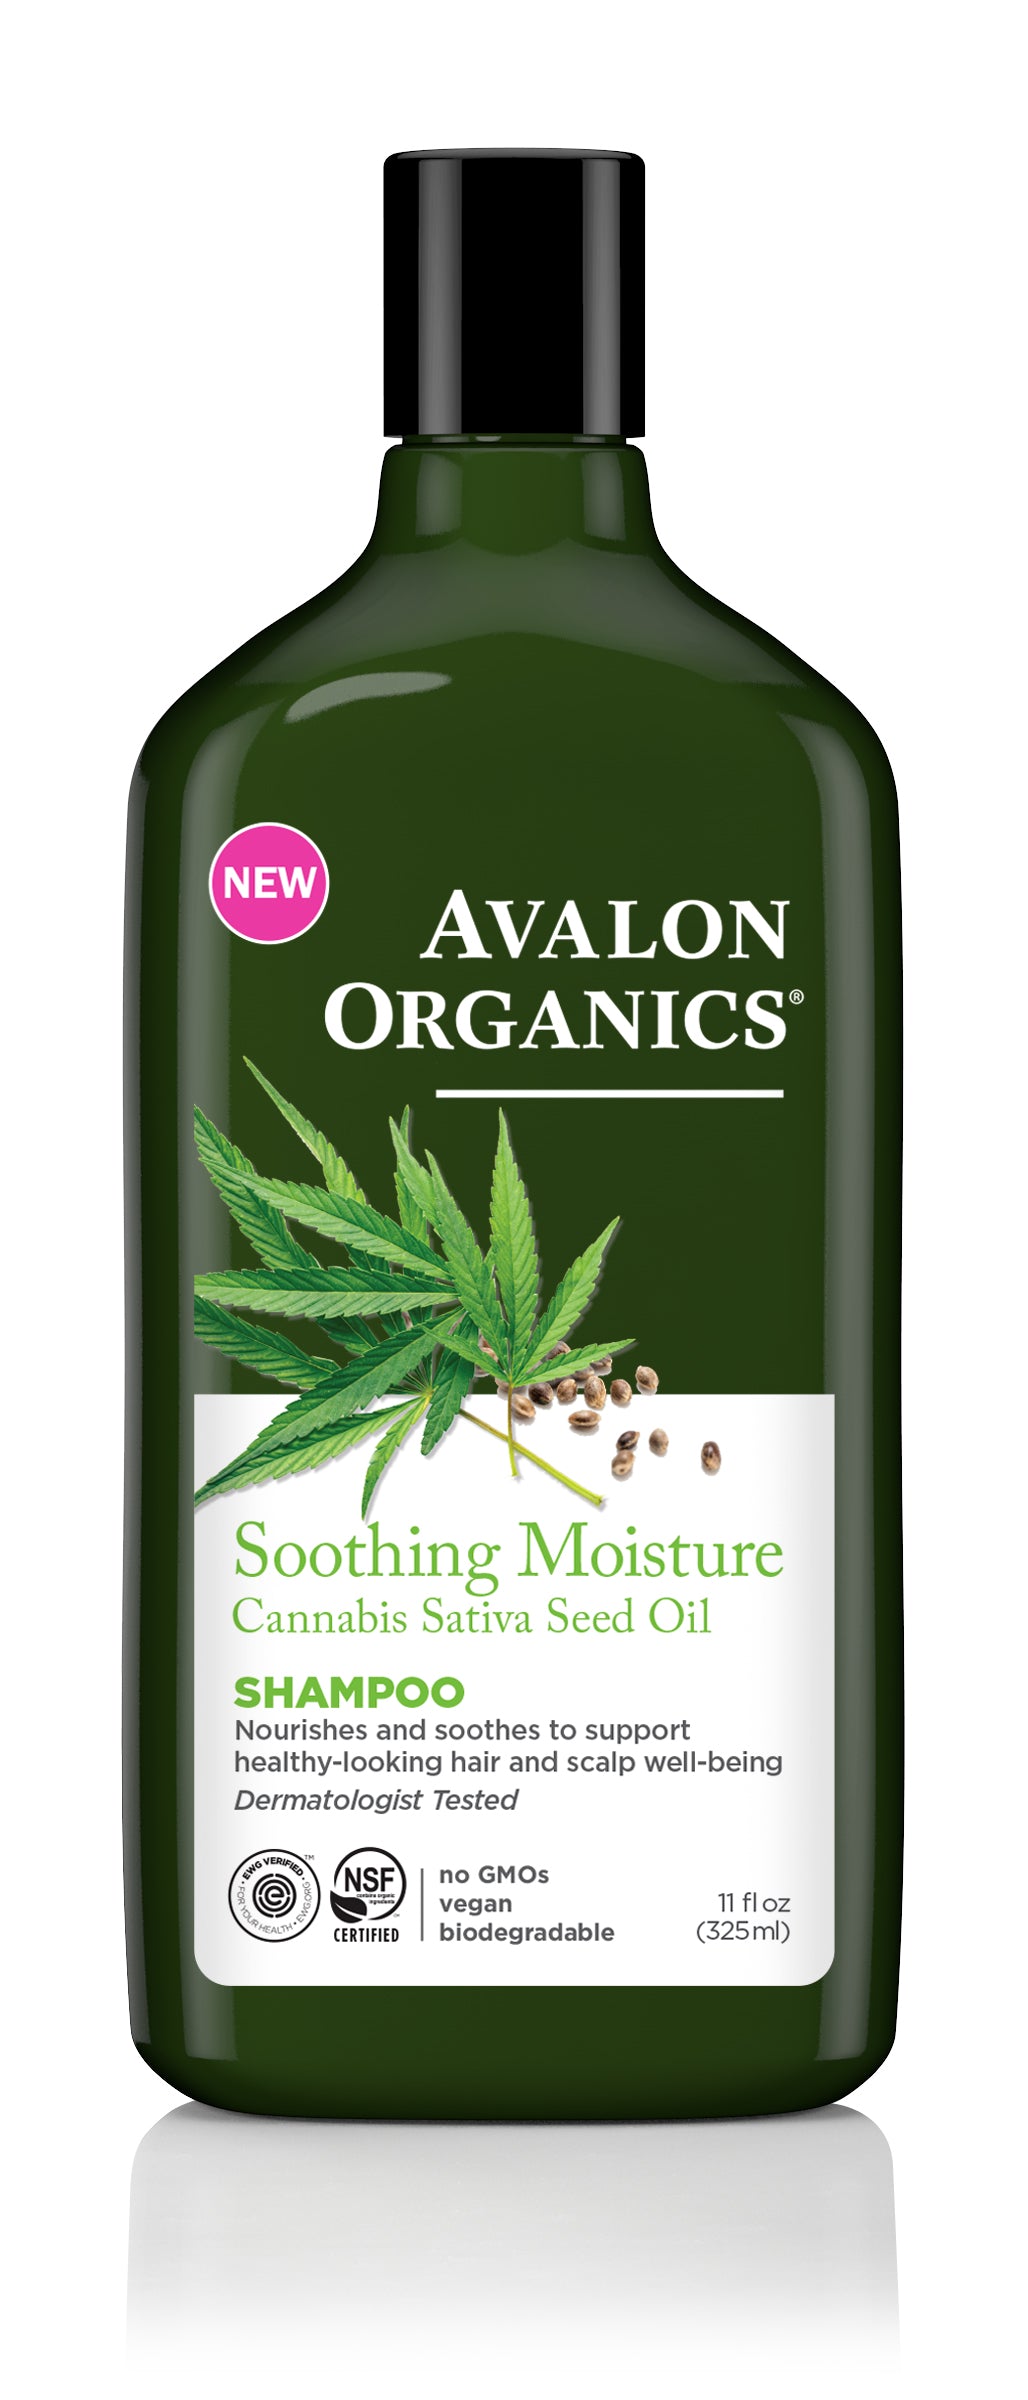 Soothing Moisture Cannabis Sativa Seed Oil